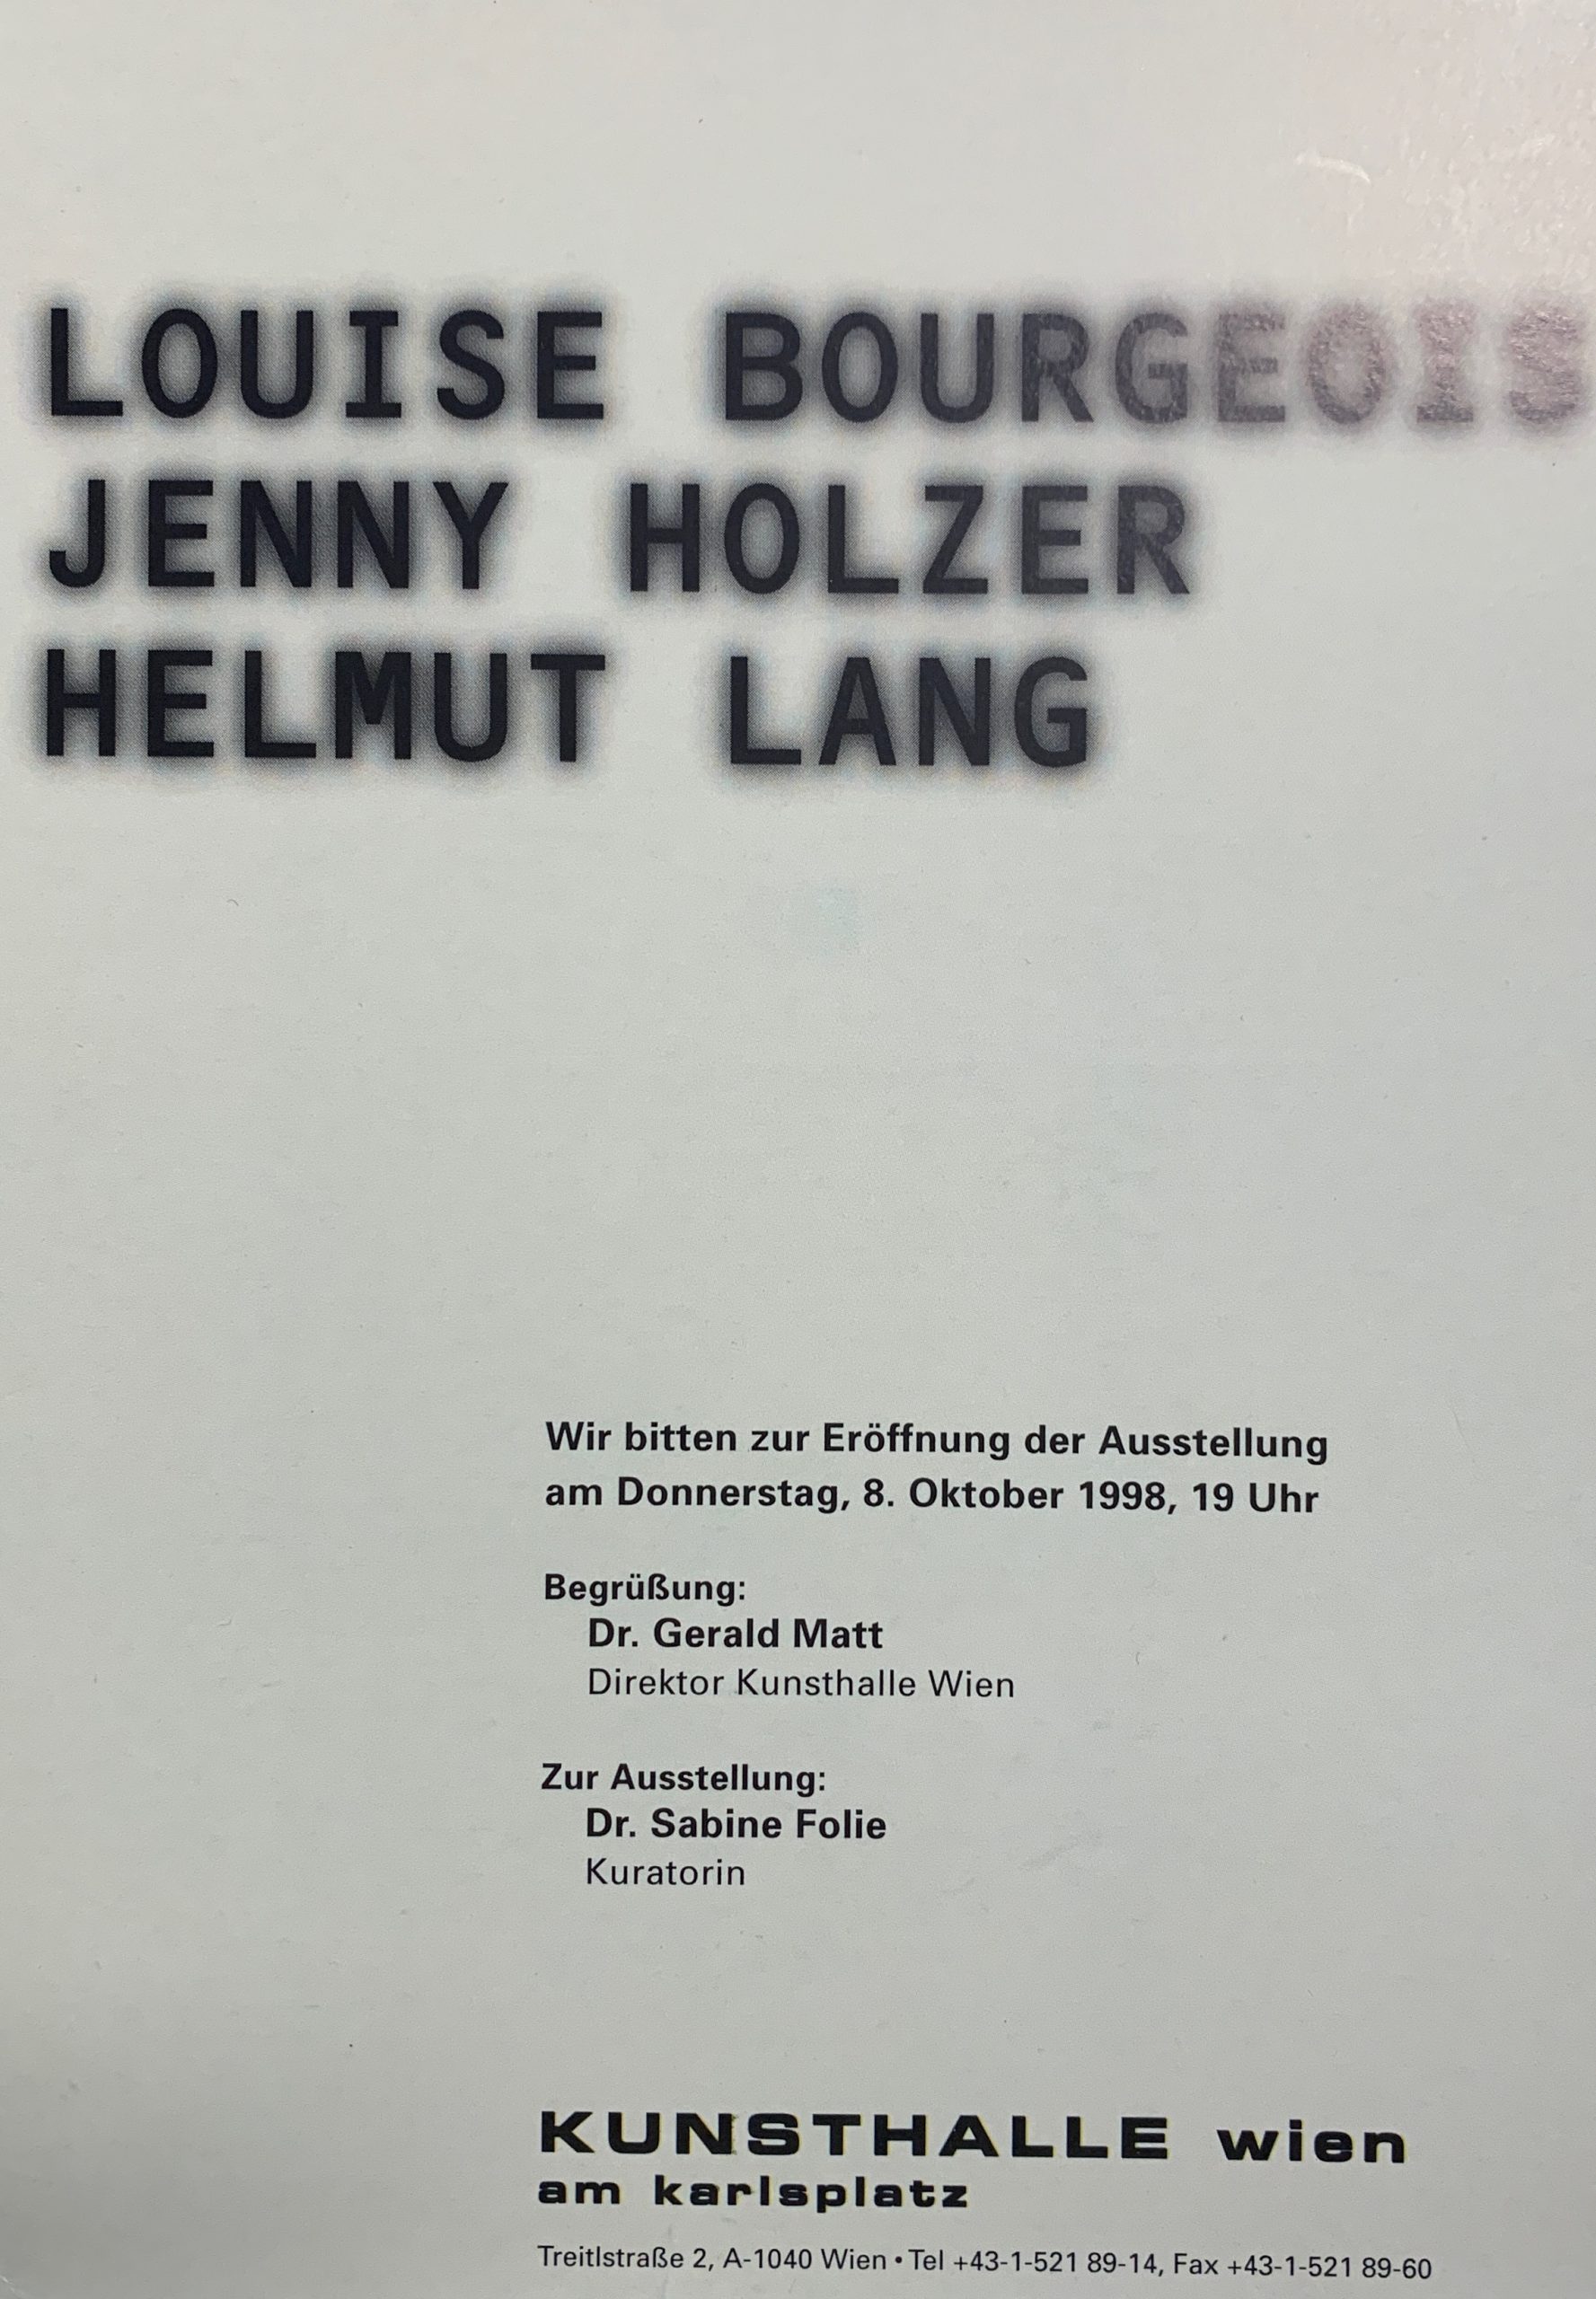 OUTFLUX  Jenny holzer, Words, Helmut lang